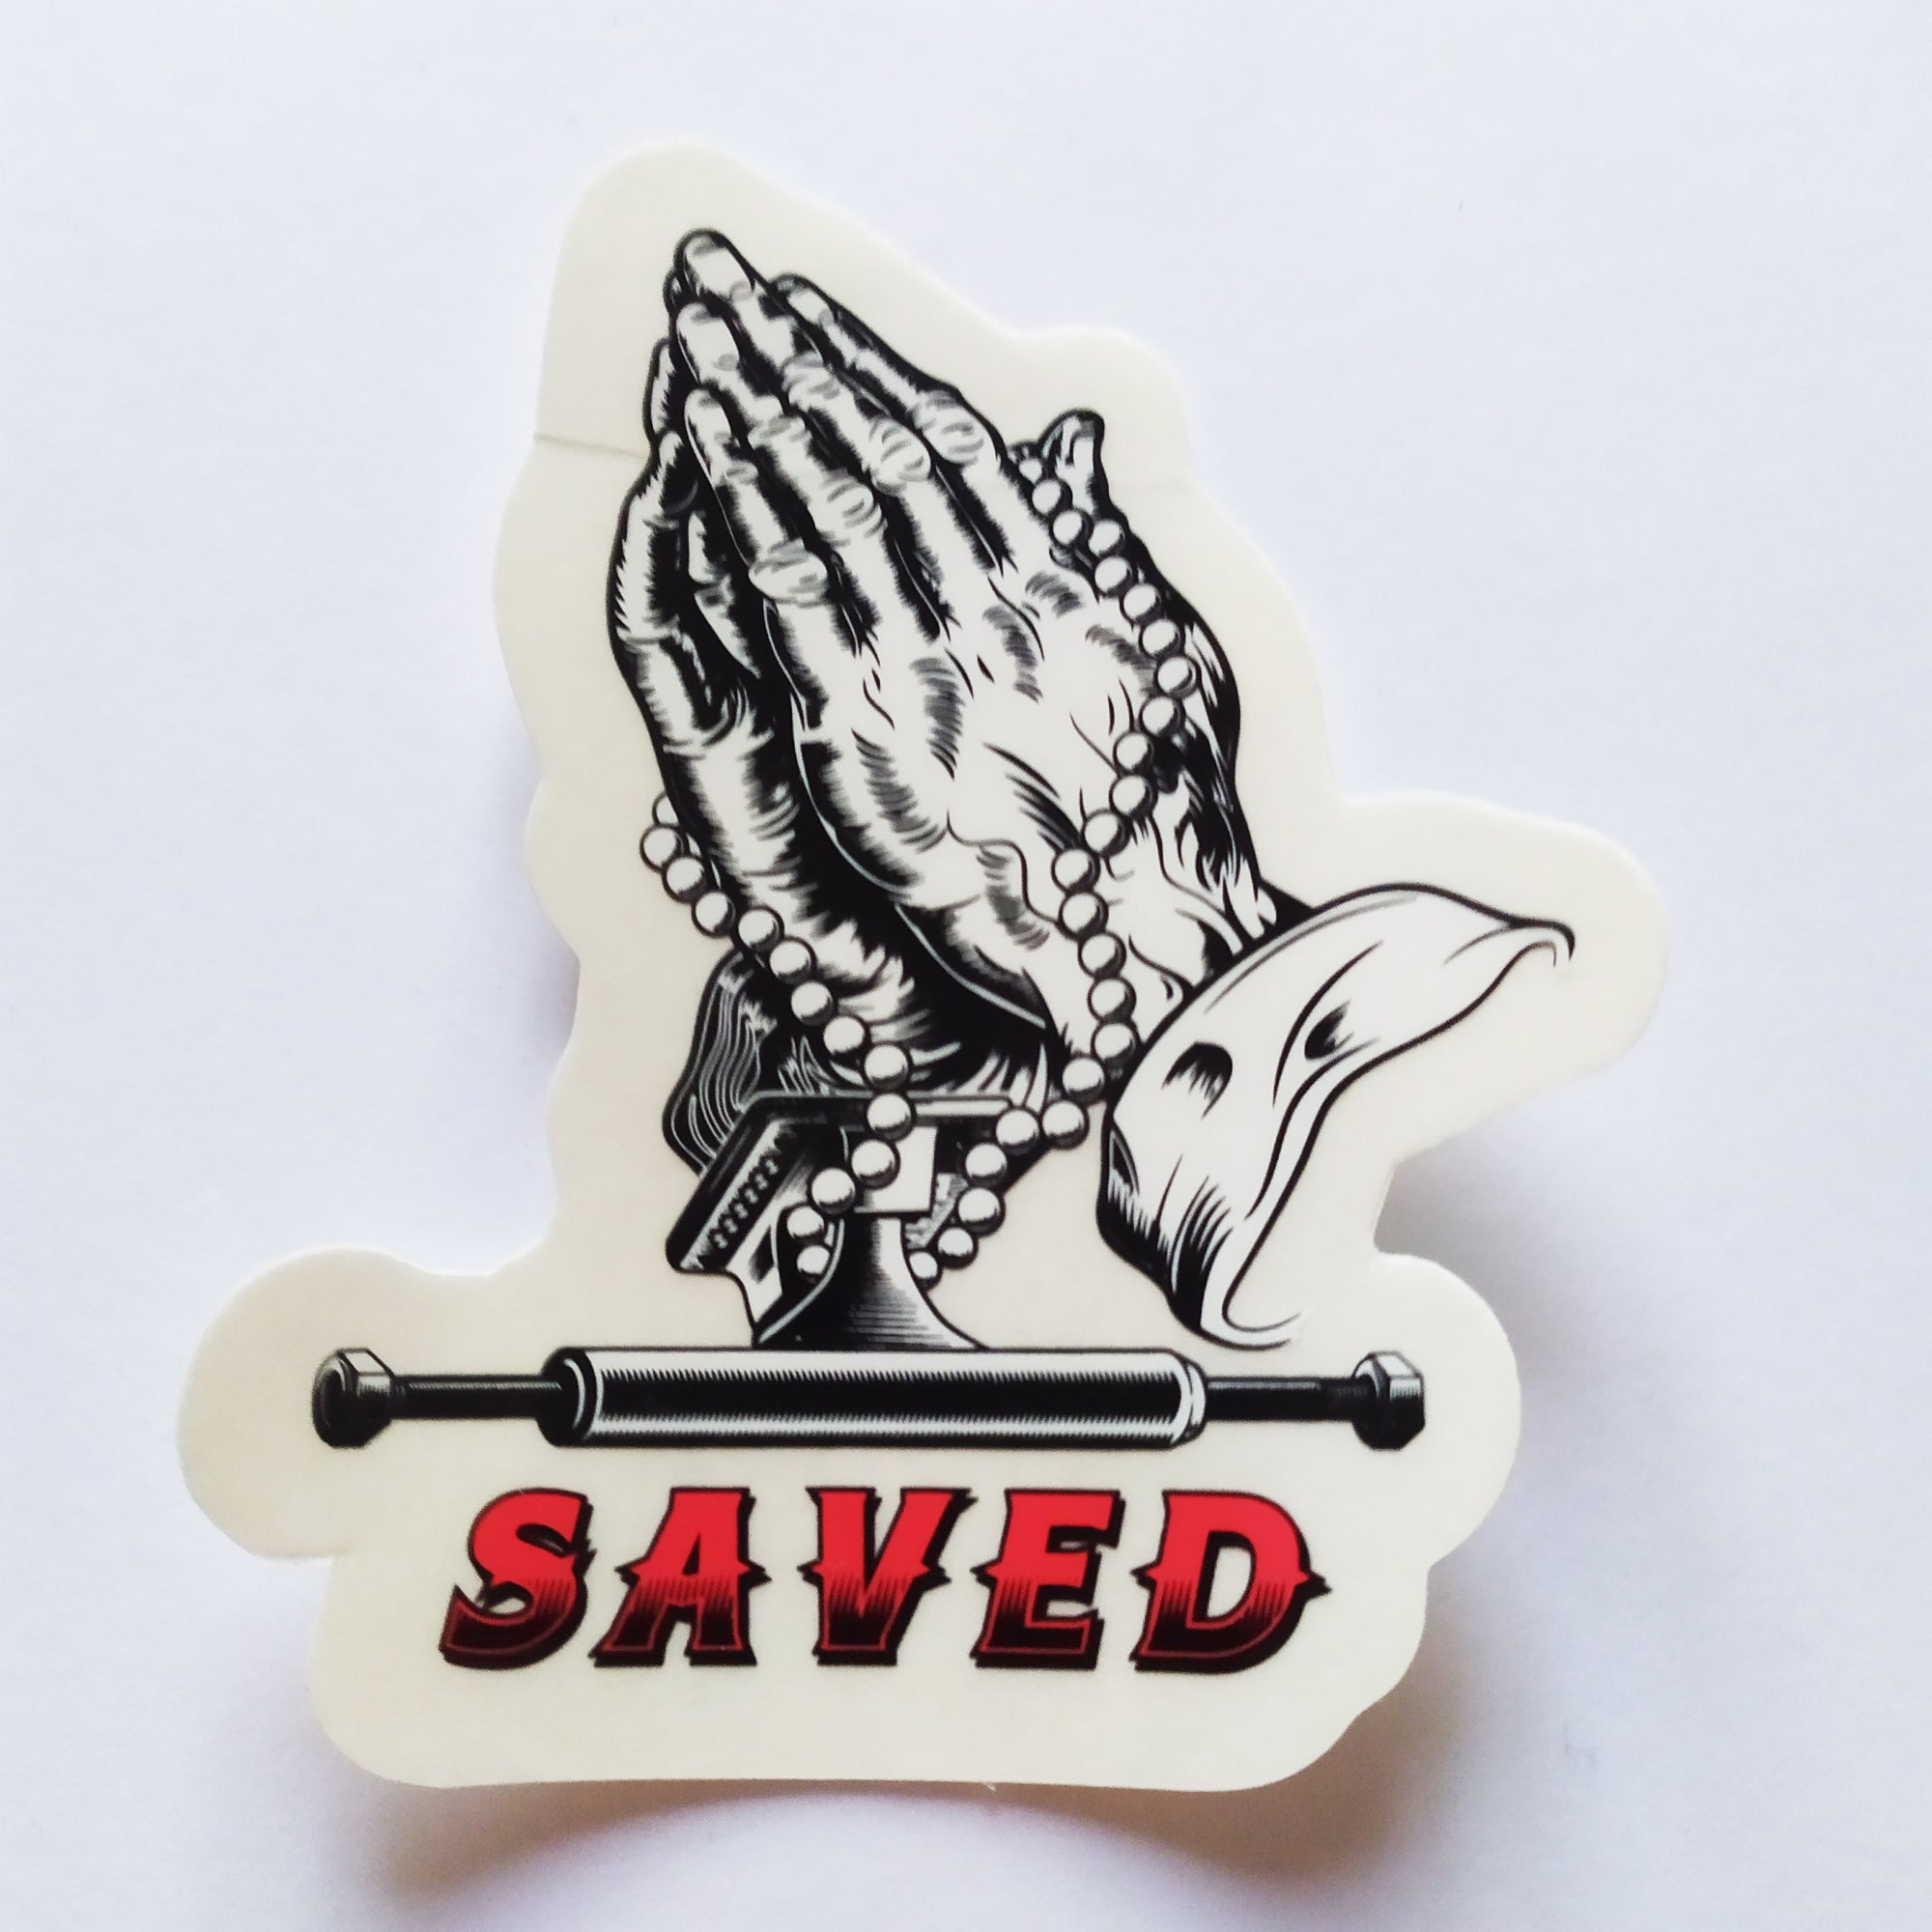 Ace Trucks Skateboard Sticker - "Saved"